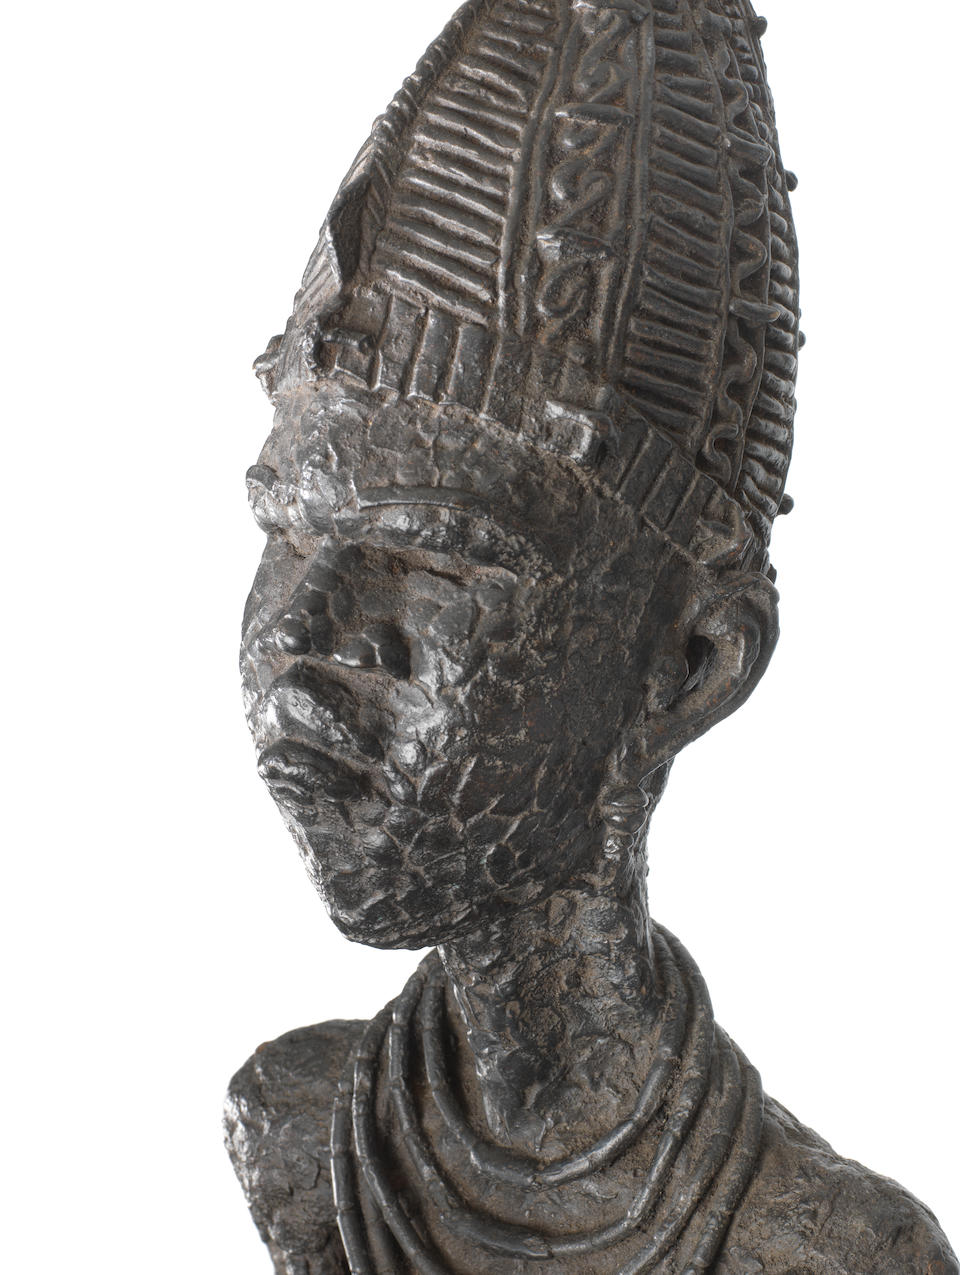 Benedict Chukwukadibia Enwonwu M.B.E (Nigerian, 1917-1994) Anyanwu (1956) 236 x 71 x 45cm (92 15/16 x 27 15/16 x 17 11/16in).